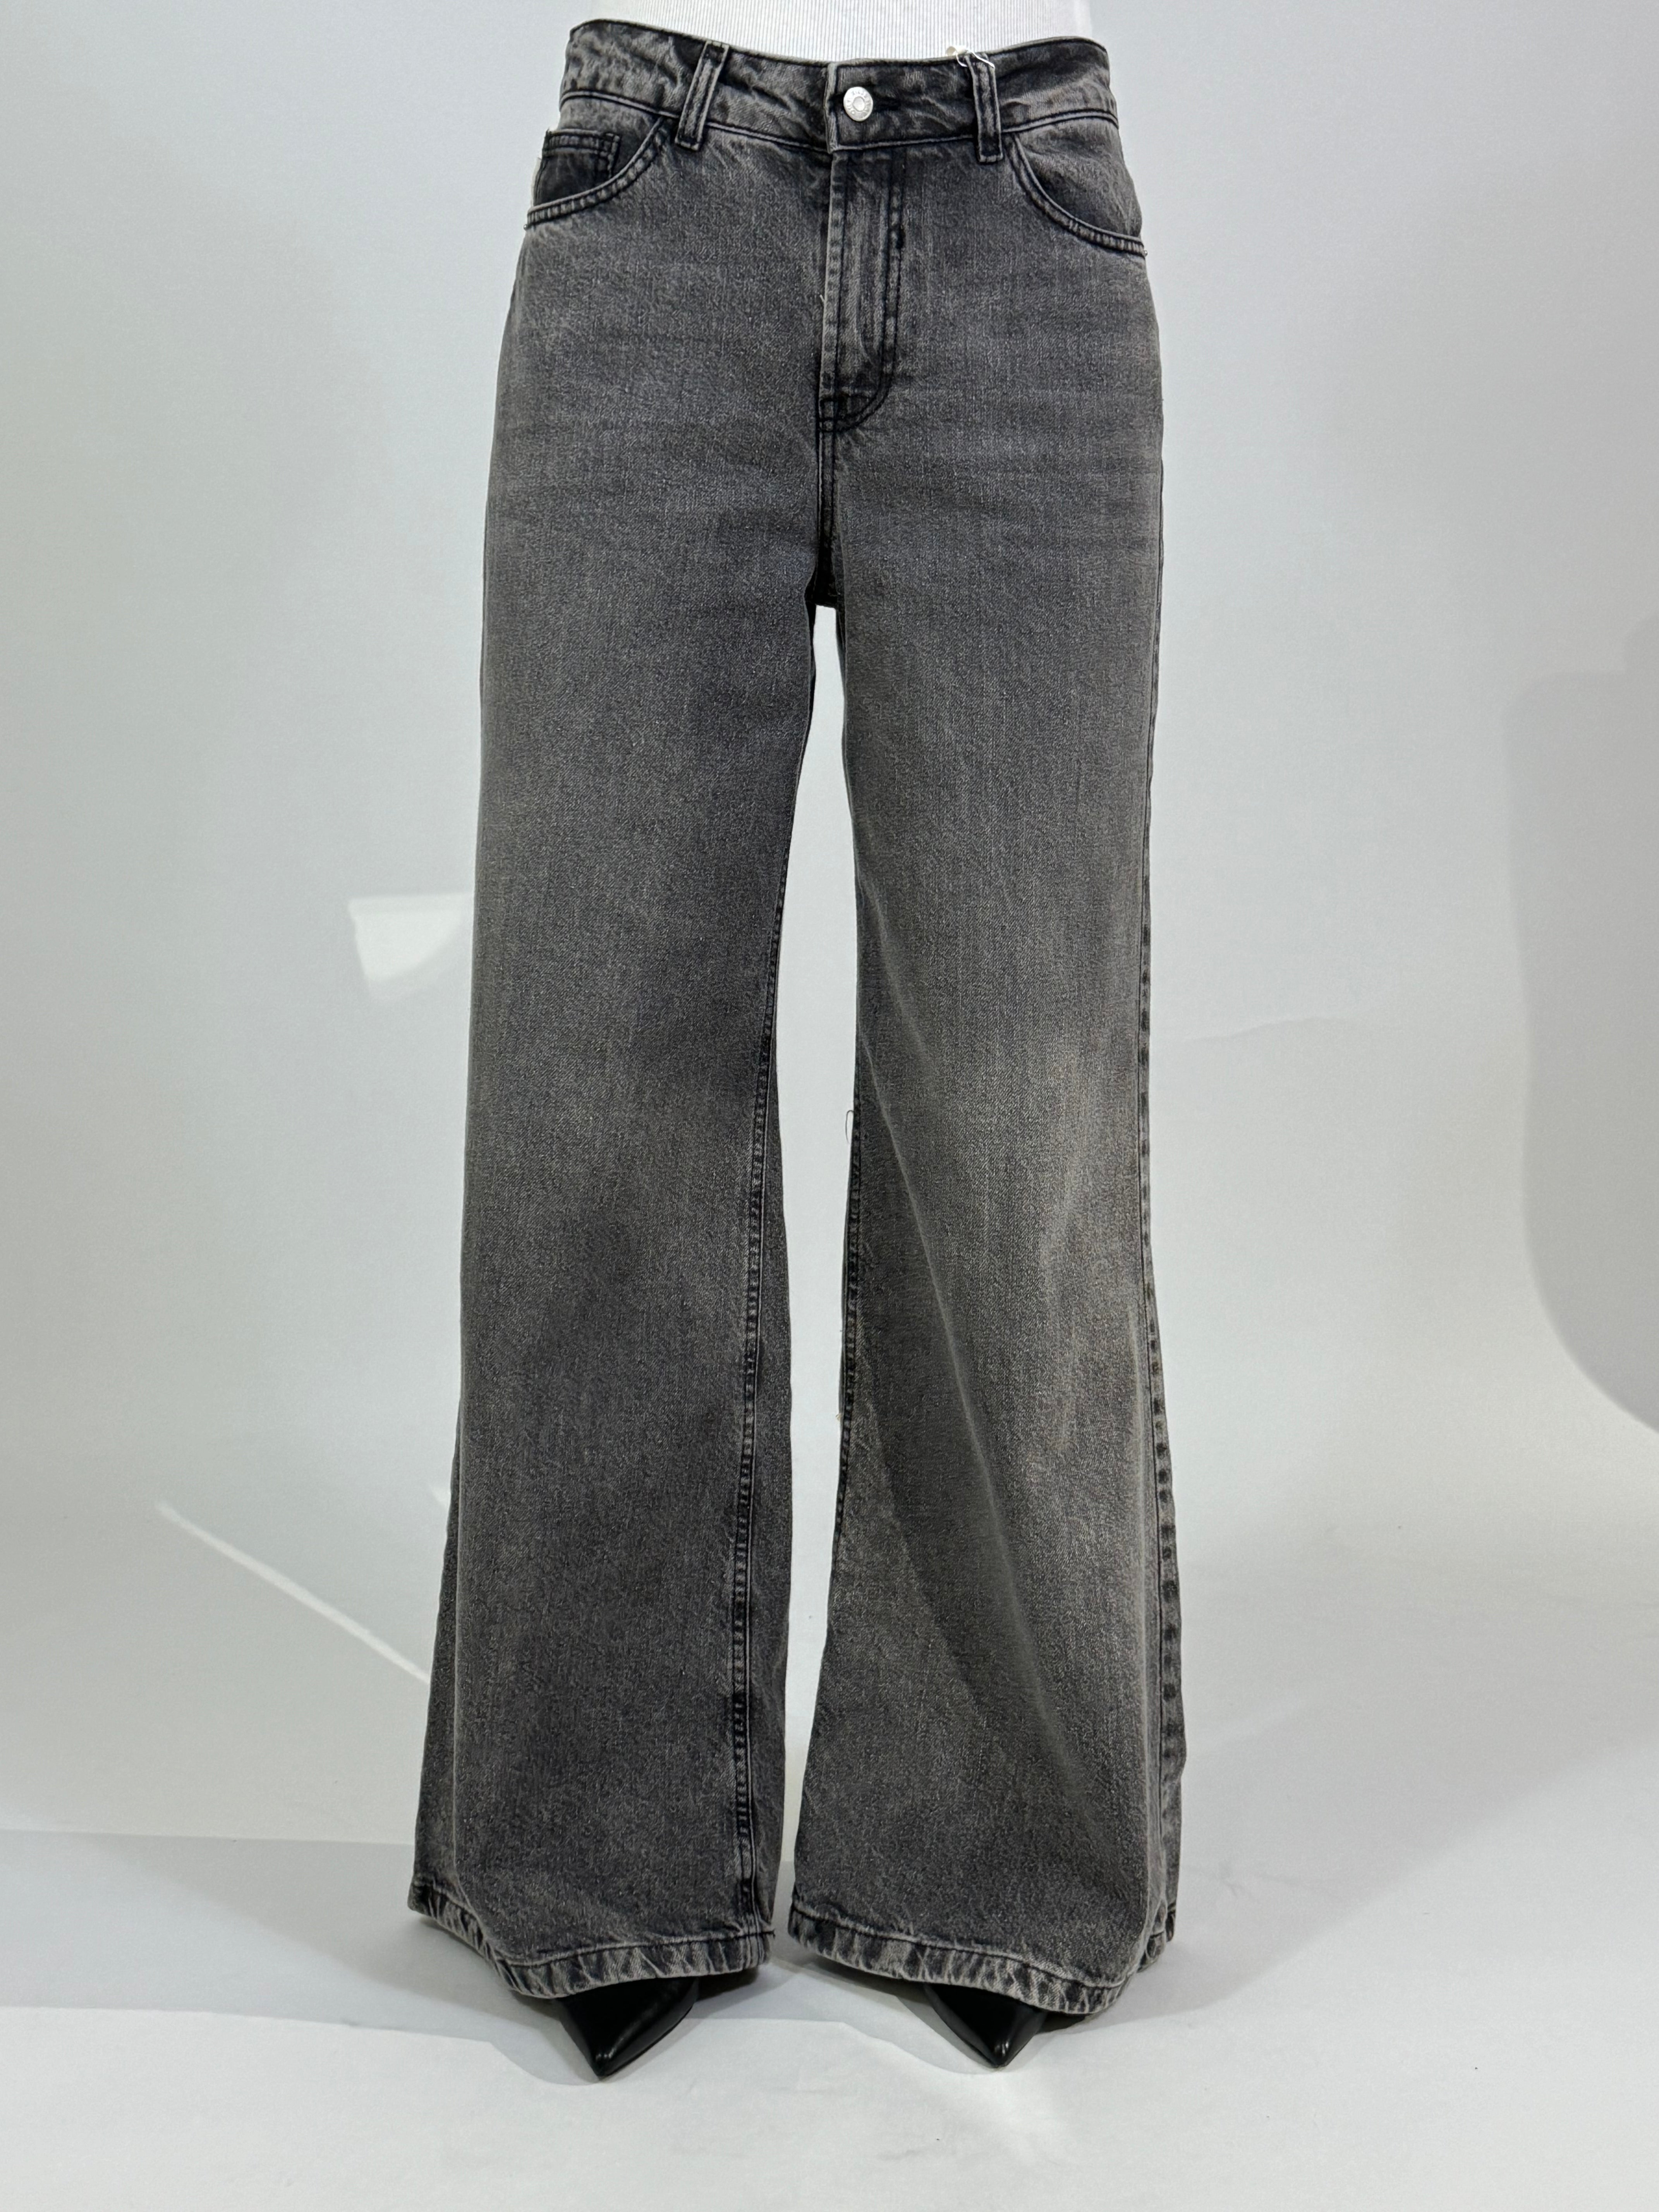 Jeans a palazzo Have One FRANKYE grigio delavè